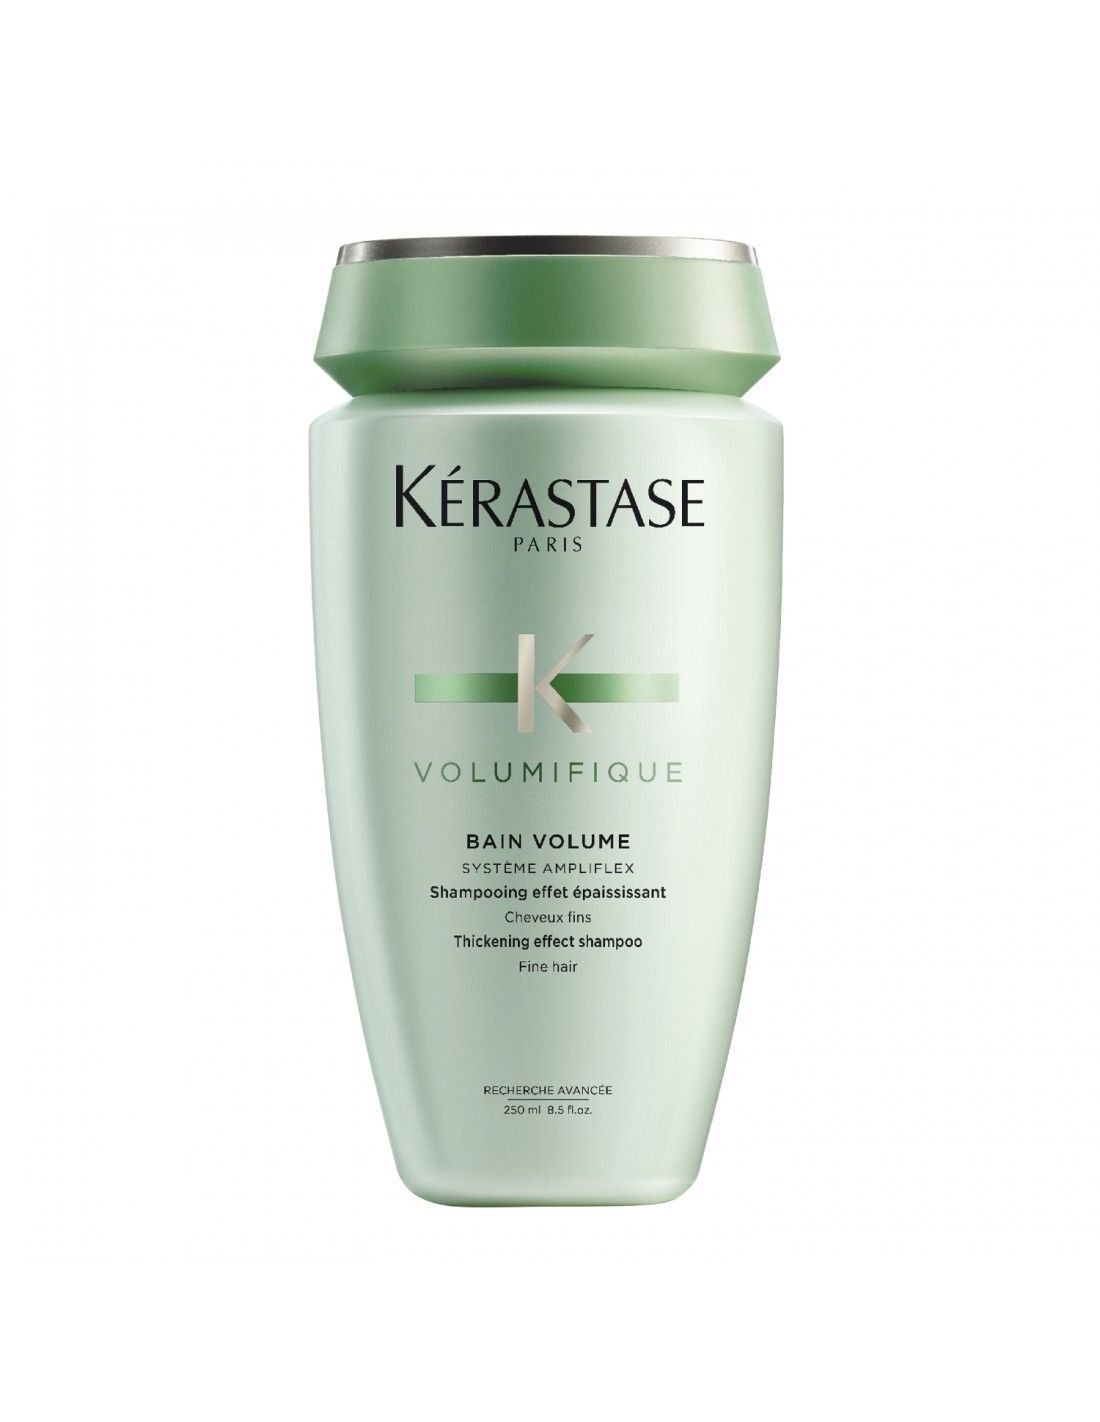 Image of Kerastase K Volumifique Bain Volume Shampoo - 250 ml